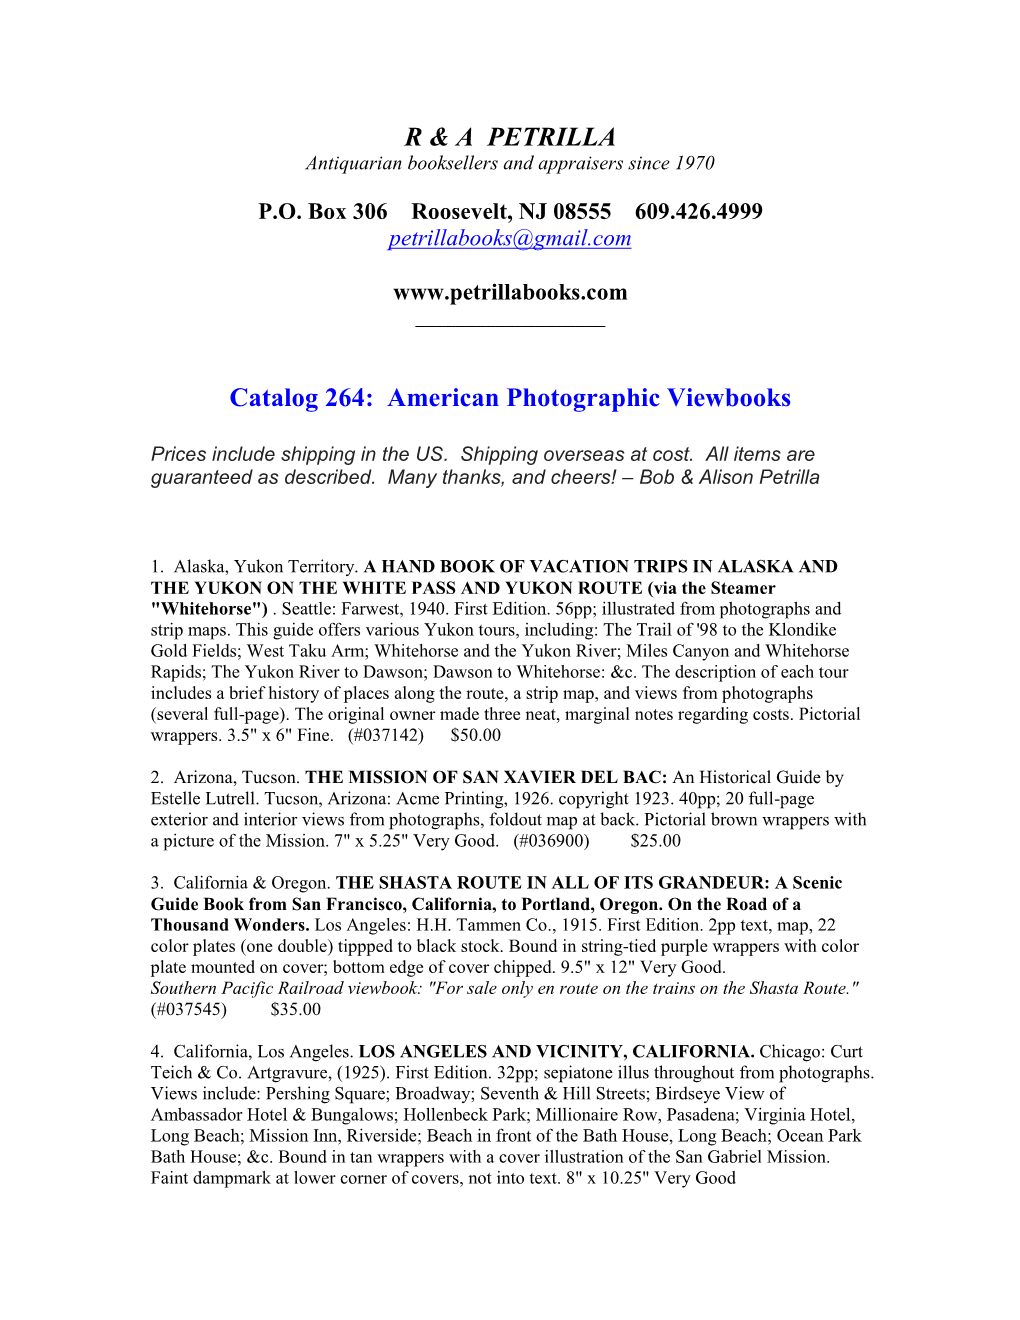 R & a PETRILLA Catalog 264: American Photographic Viewbooks